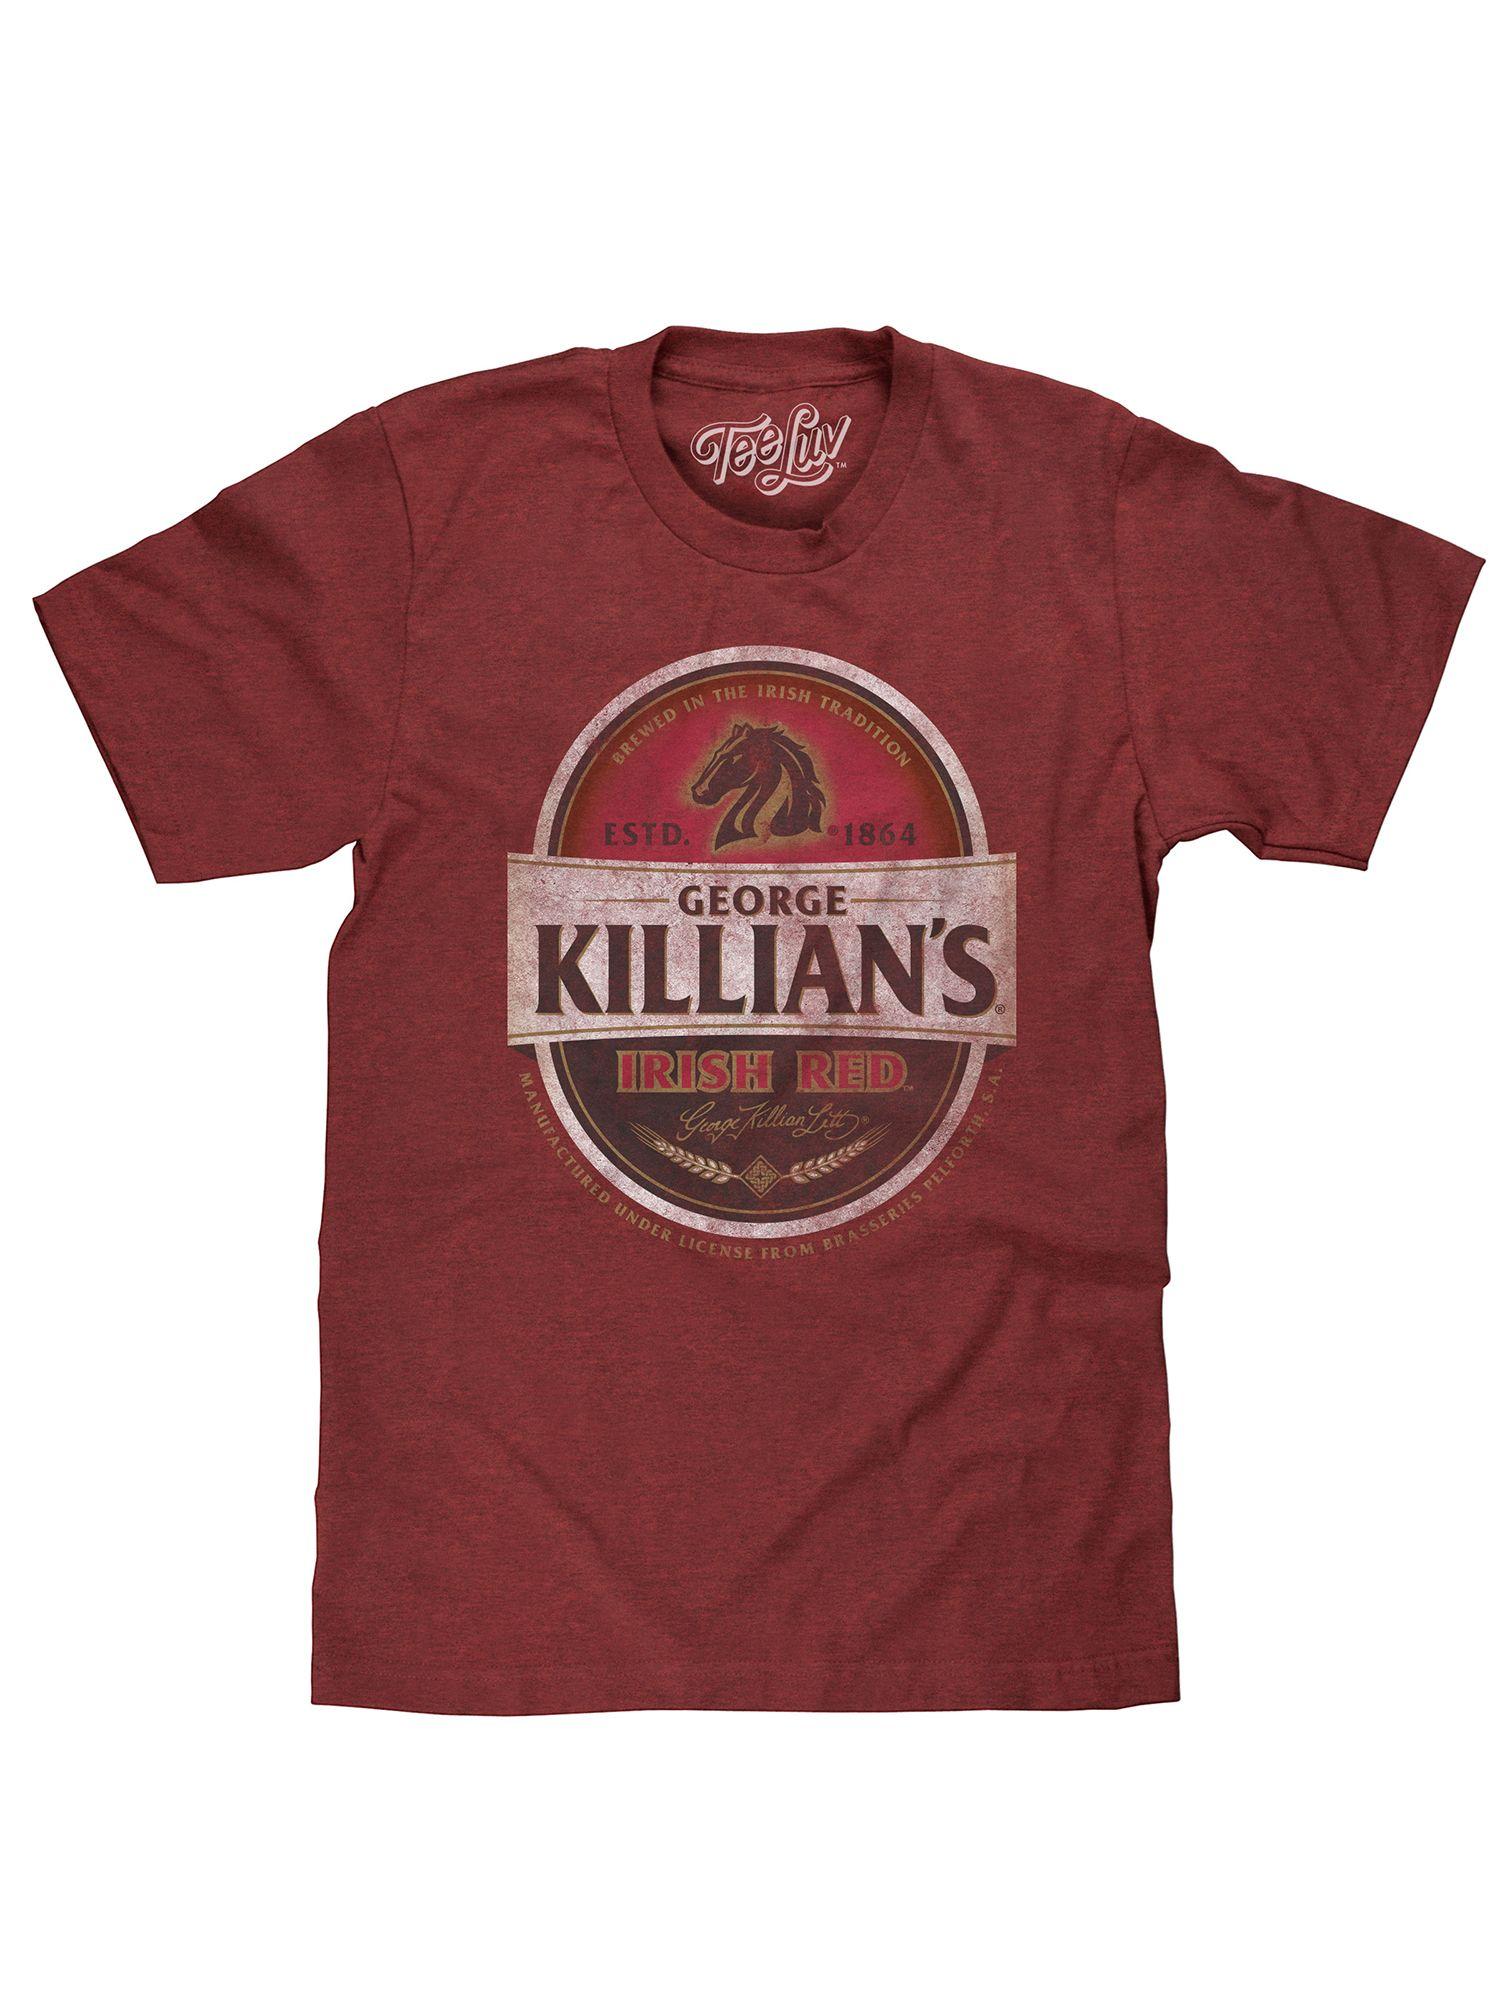 Killians Logo - LogoDix